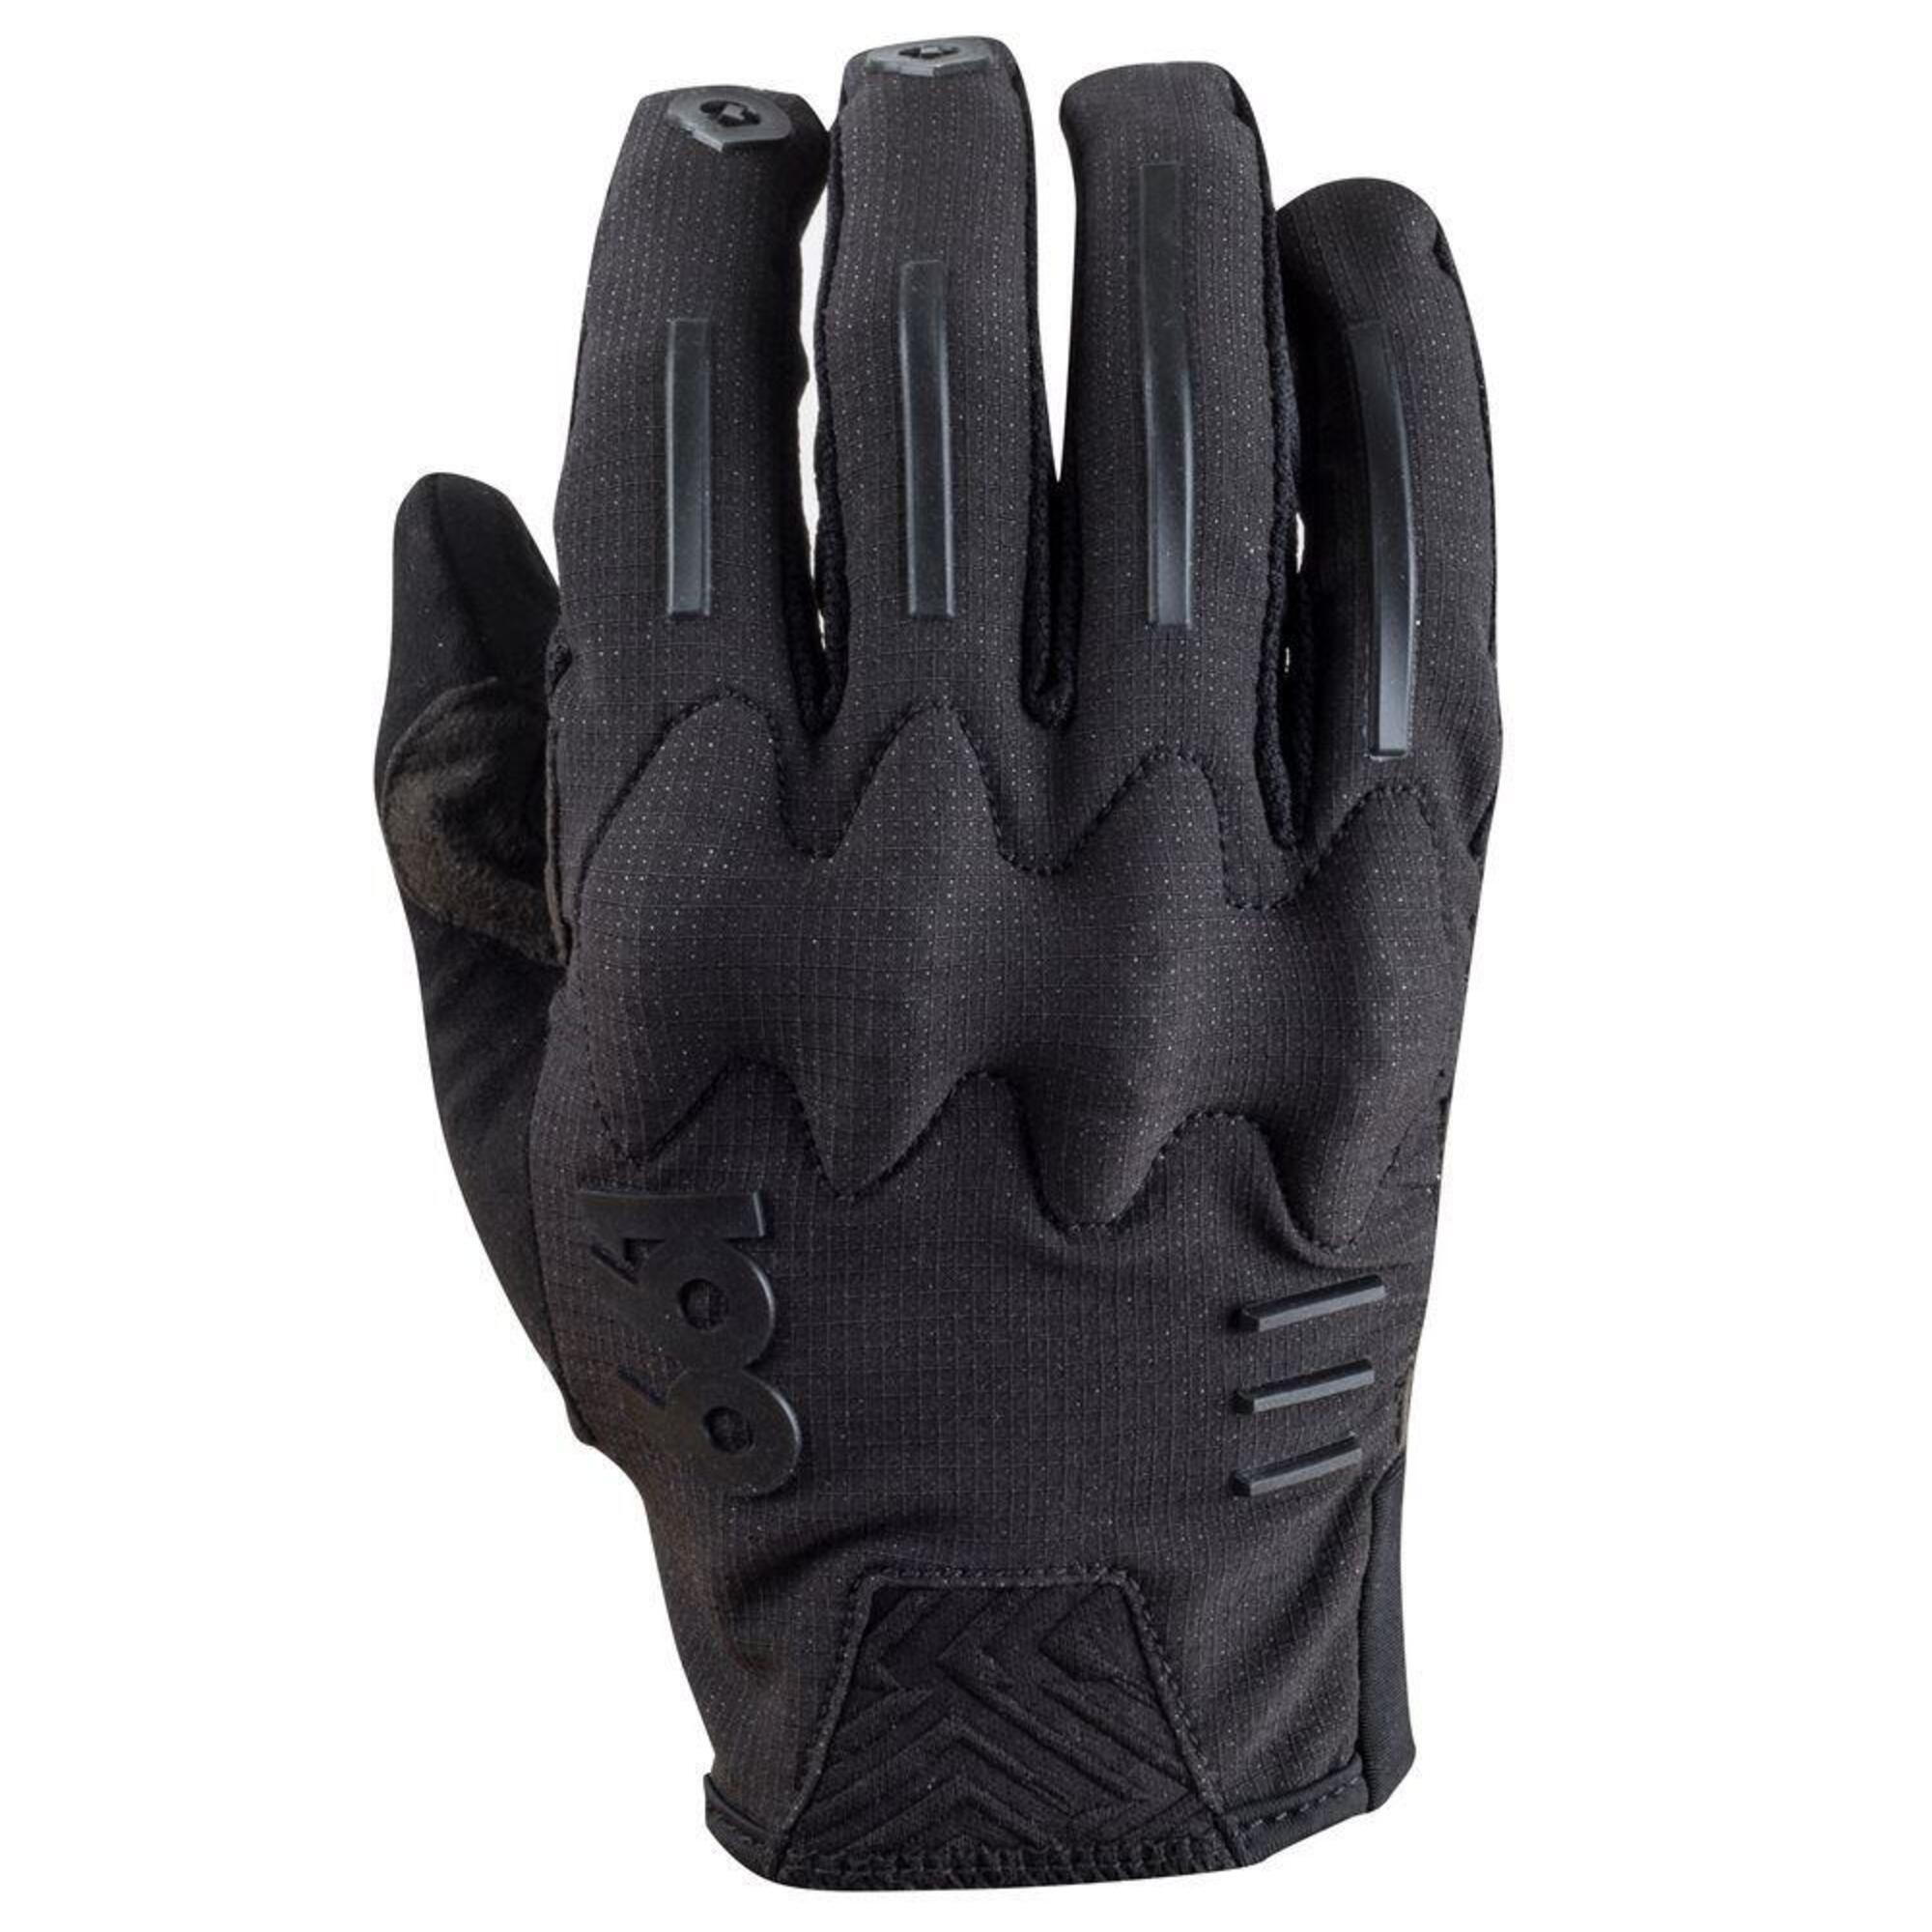 661 Recon Advance Cycling Gloves Full-finger Unisex - Black 1/4